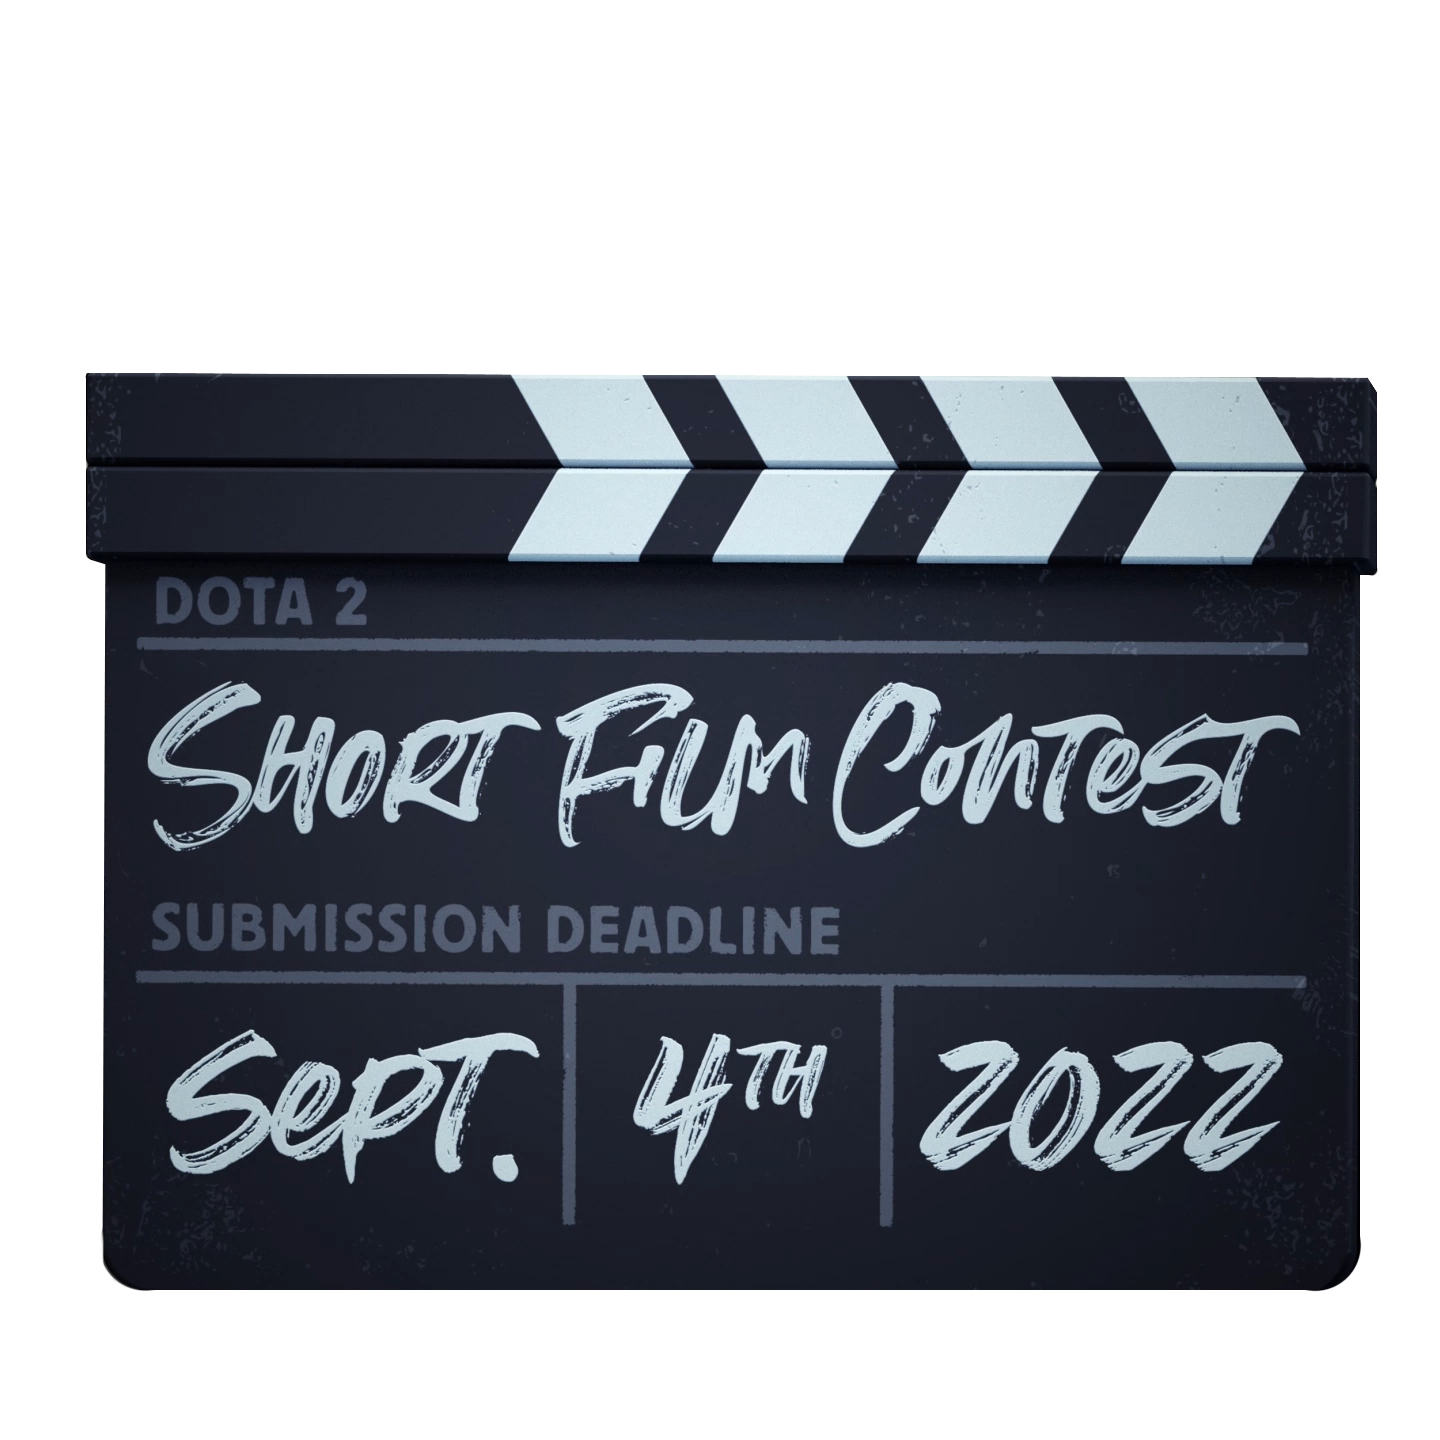 Dota short film contest фото 49